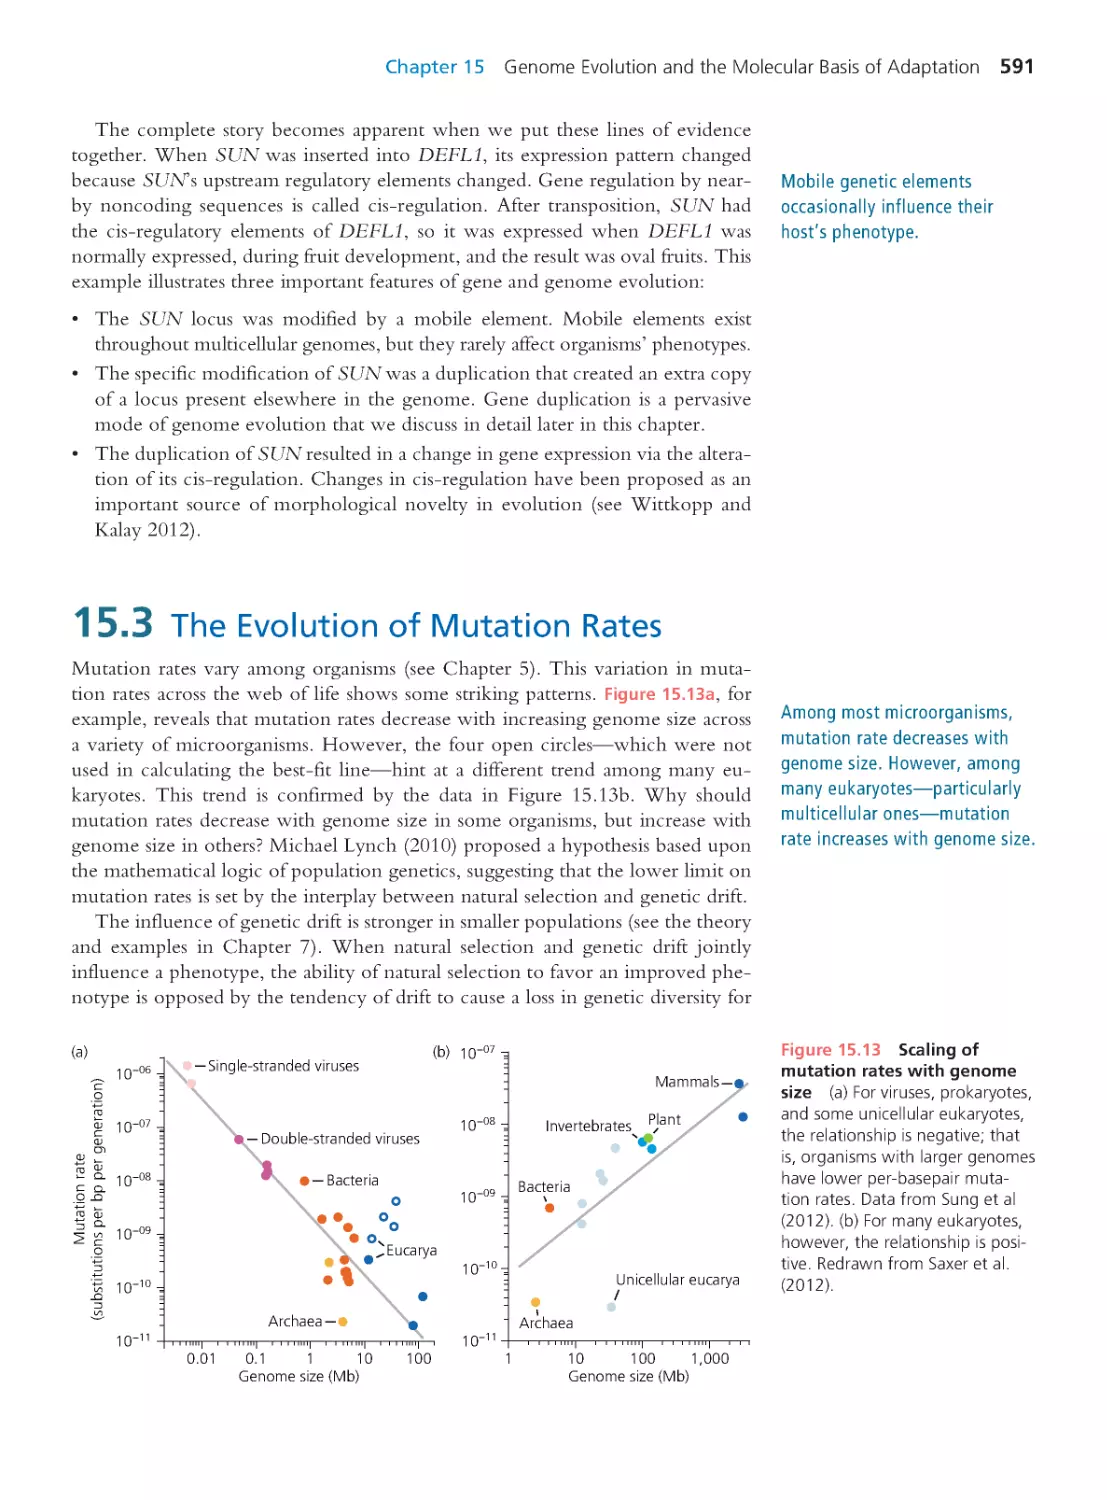 15.3 The Evolution of Mutation Rates